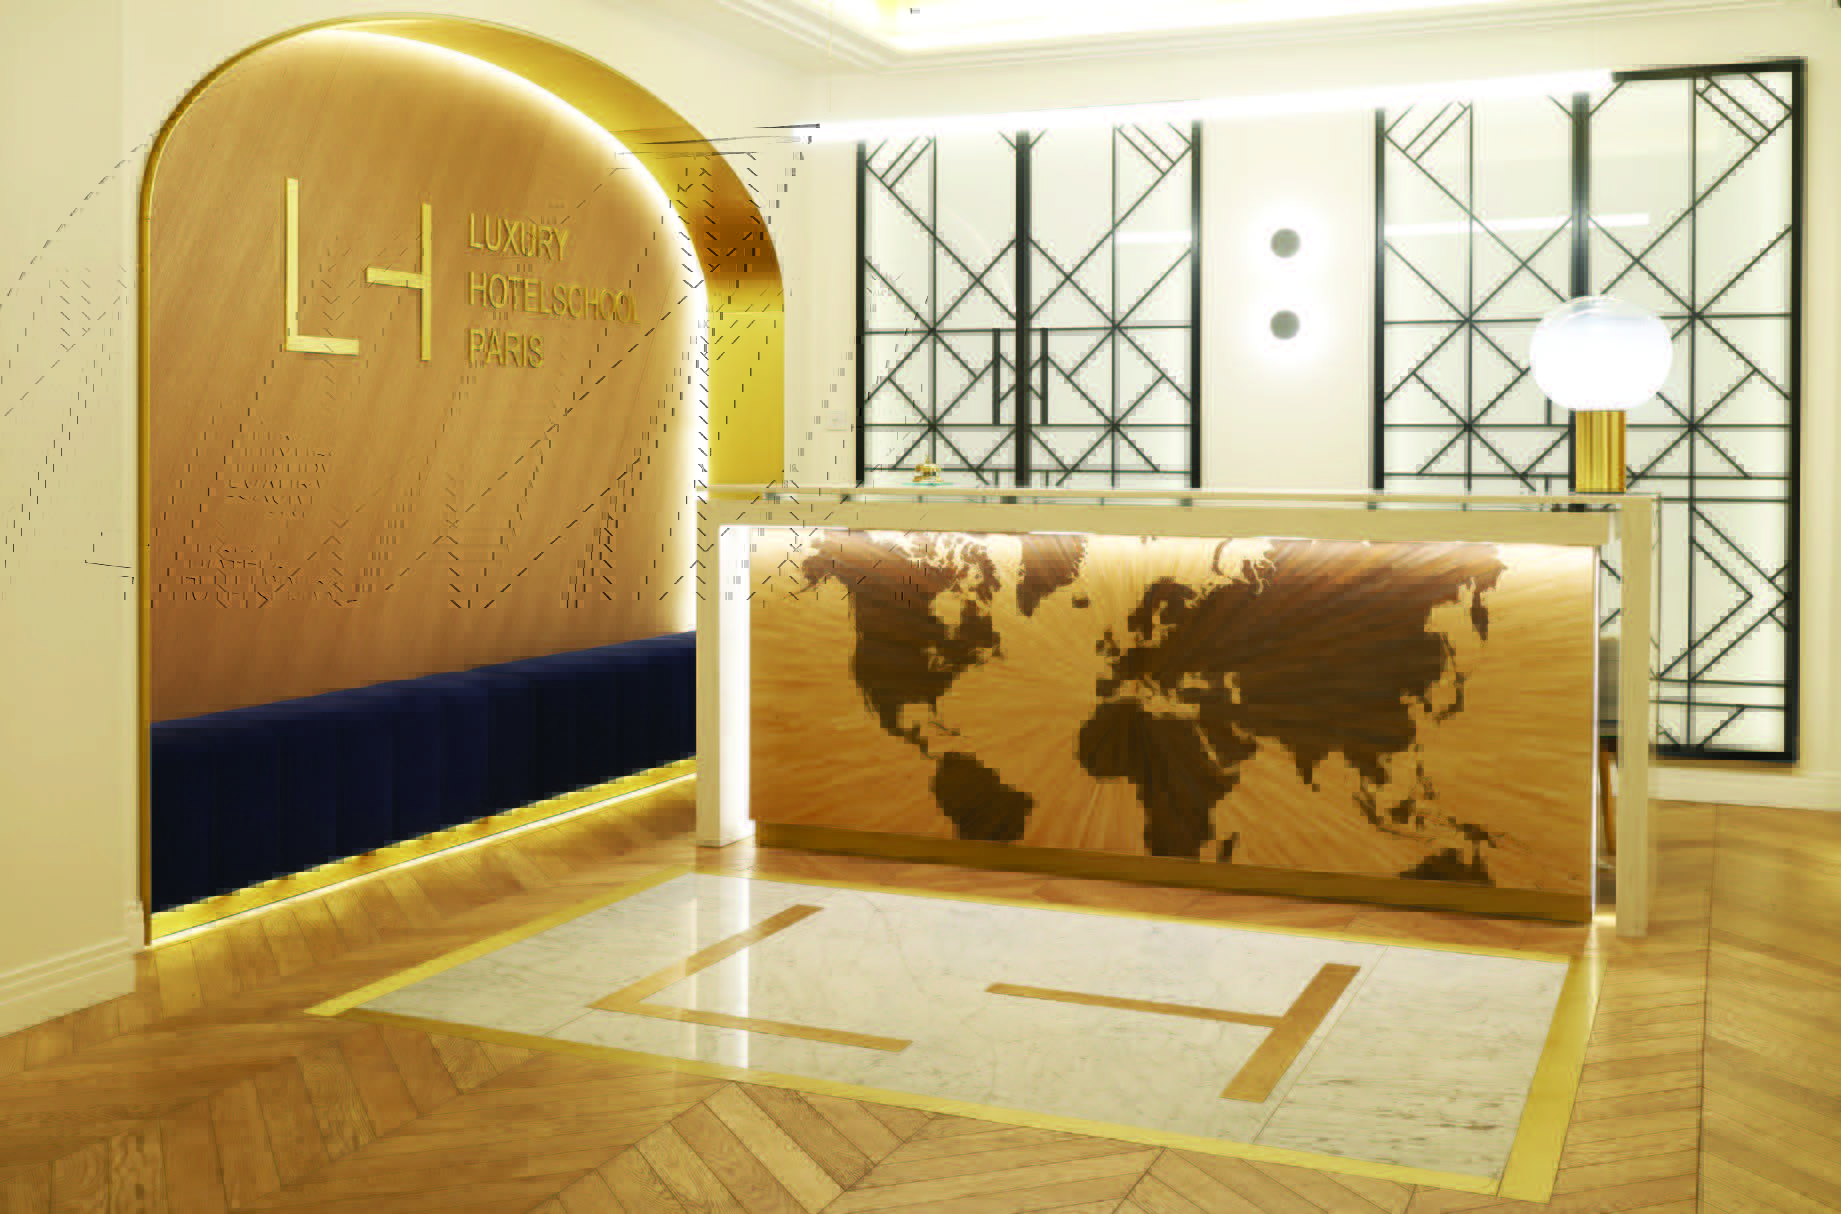 Hall d'accueil de la Luxury Hotel School - Luxury Hotelschool